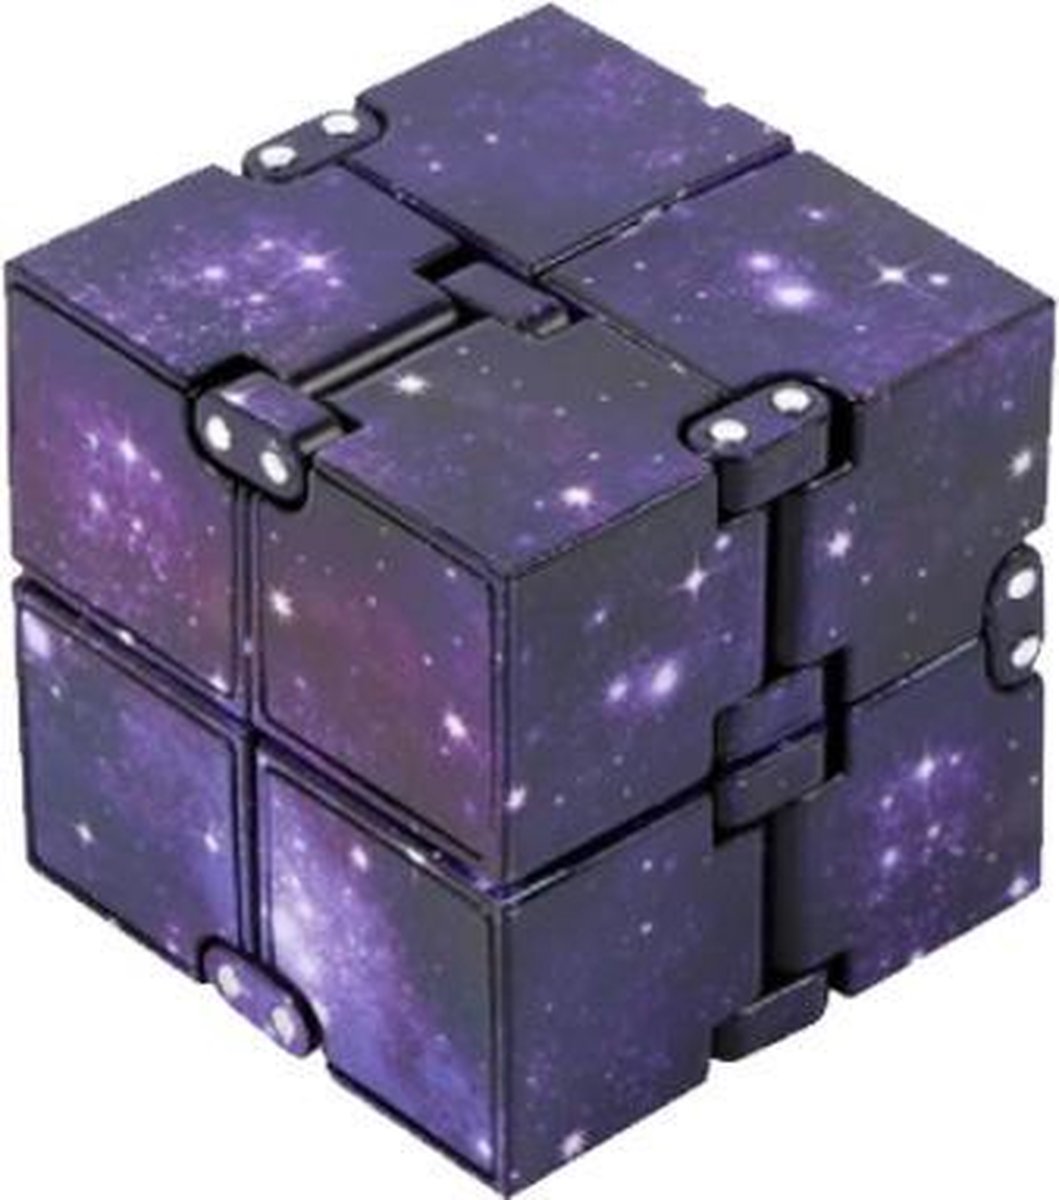 Infinity cube | fidget toys | space - Fidget Cube